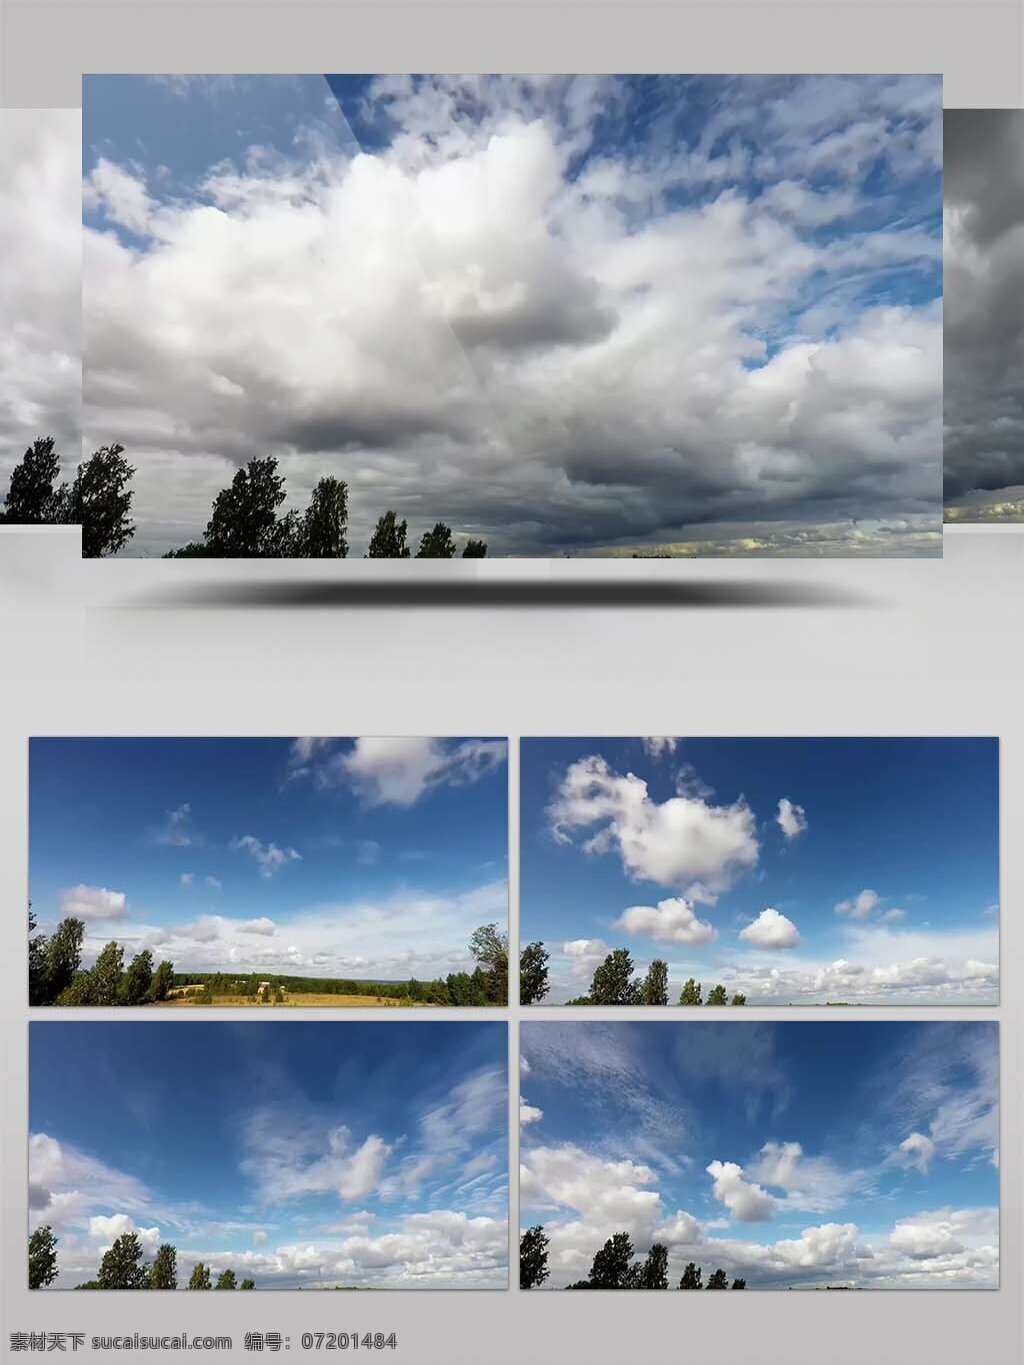 4k 超 清 天空 云朵 延时 拍摄 视频 白云 白云飘动 蓝色天空 蓝天白云 天空素材 蔚蓝 宣传片素材 云雾 自然世界 自然素材